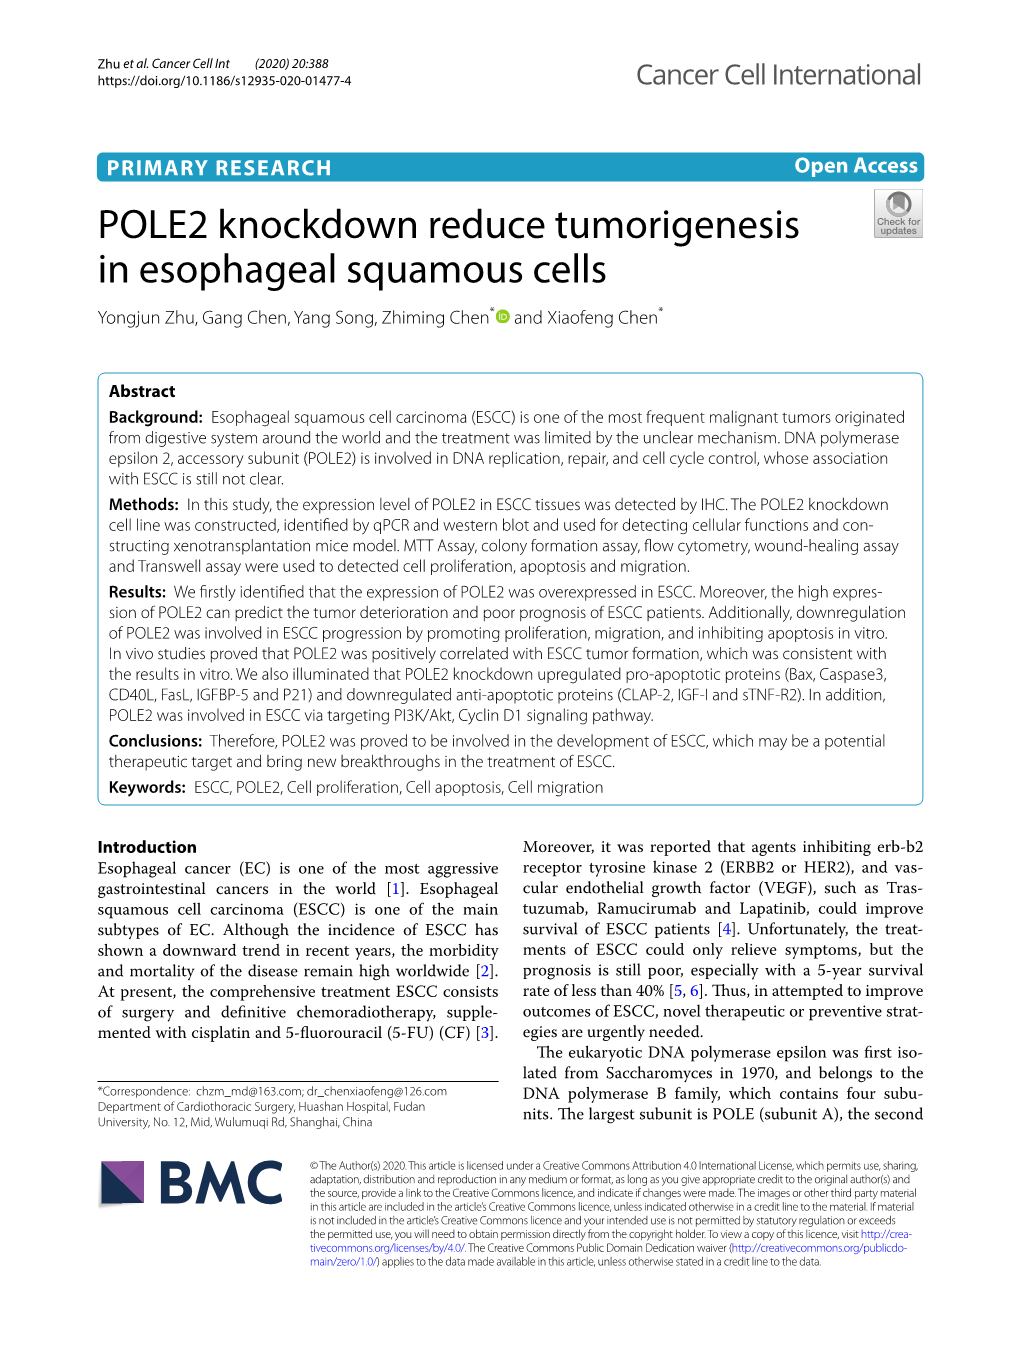 POLE2 Knockdown Reduce Tumorigenesis in Esophageal Squamous Cells Yongjun Zhu, Gang Chen, Yang Song, Zhiming Chen* and Xiaofeng Chen*